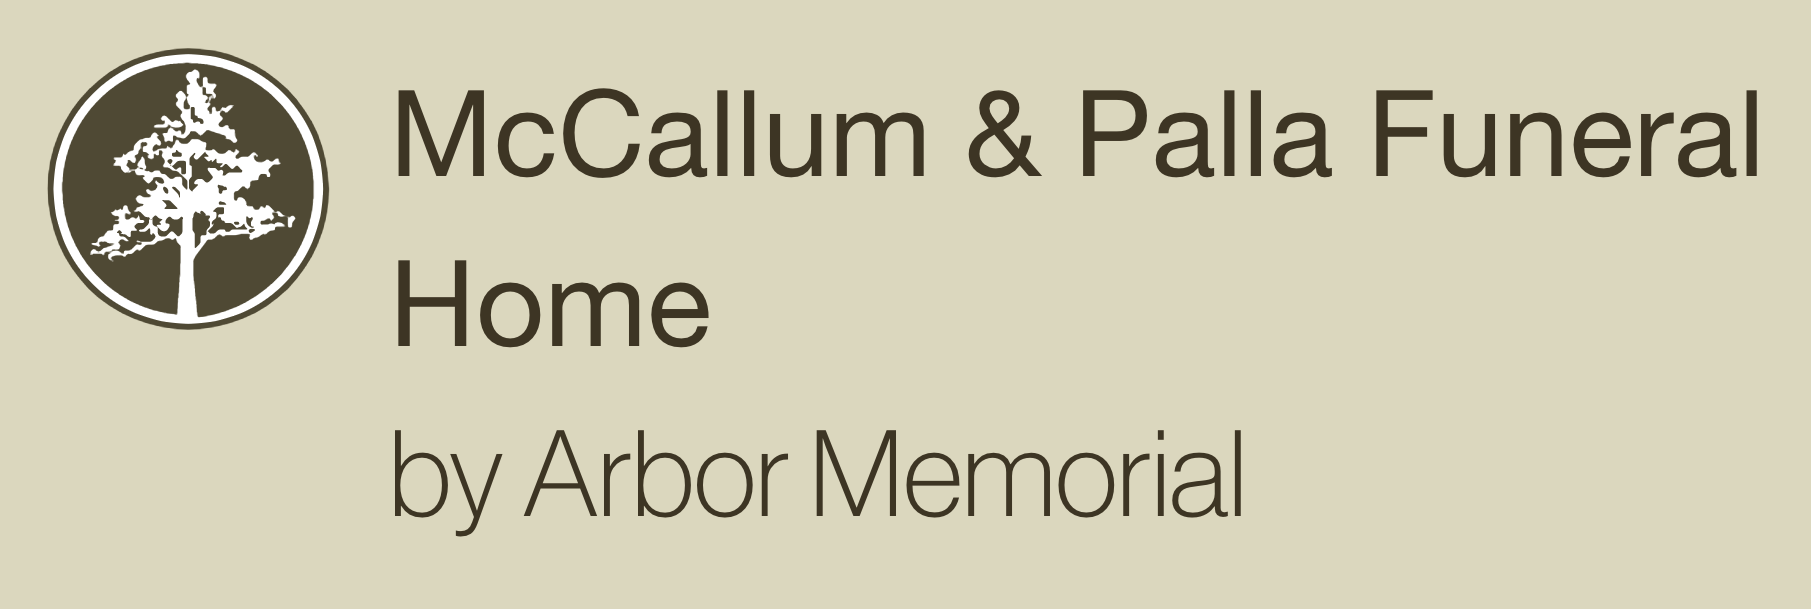 McCallum & Palla Funeral Home by Arbor Memorial